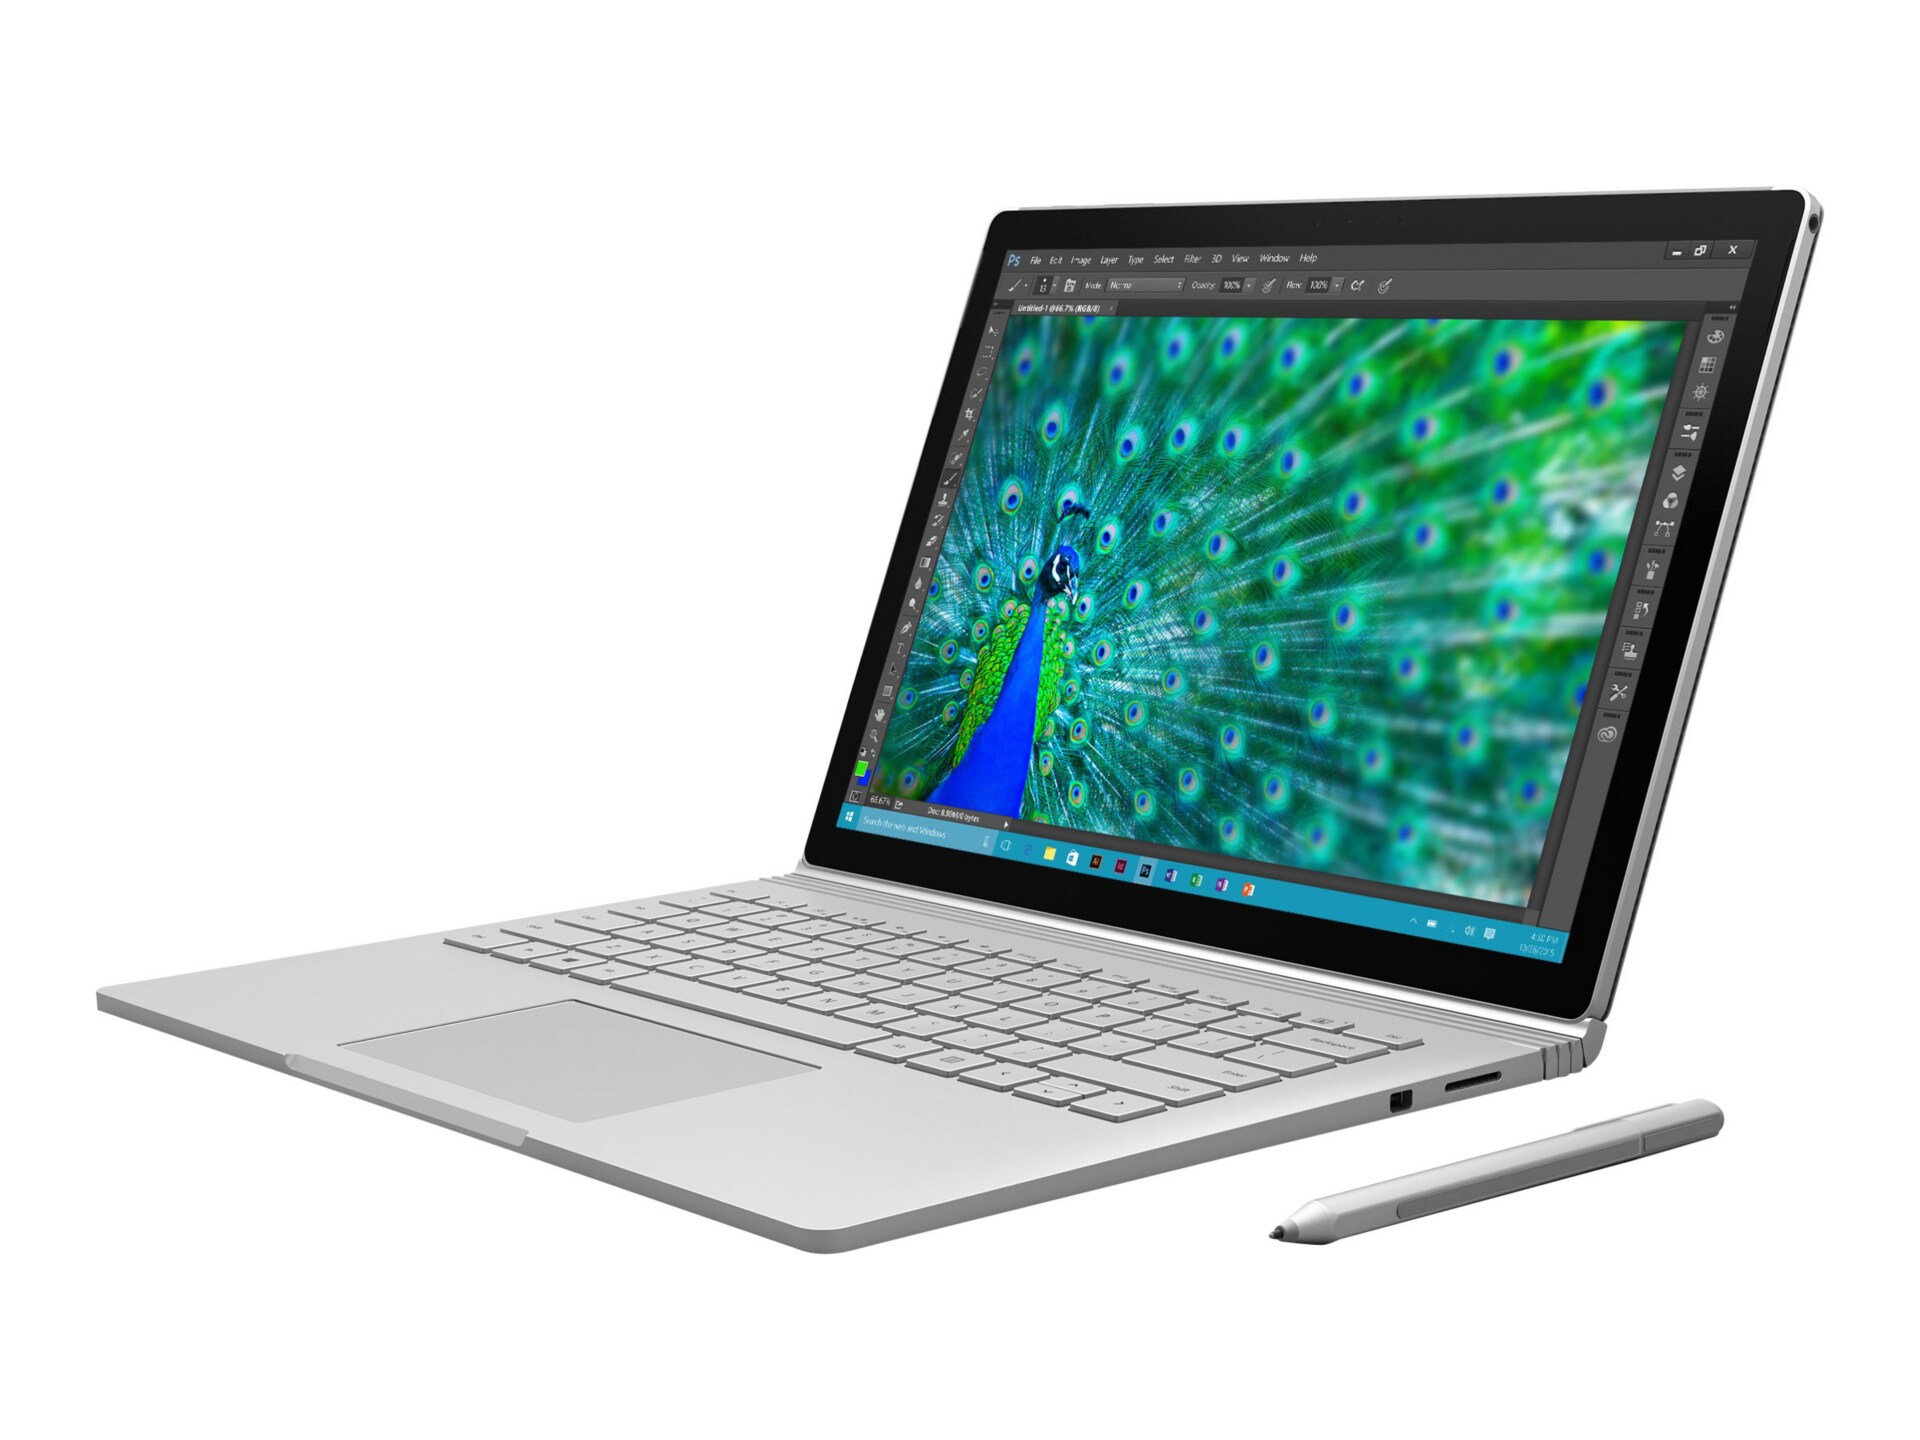 Microsoft Surface Book - 13.5" - Core i7 6600U - 8 GB RAM - 256 GB SSD - US